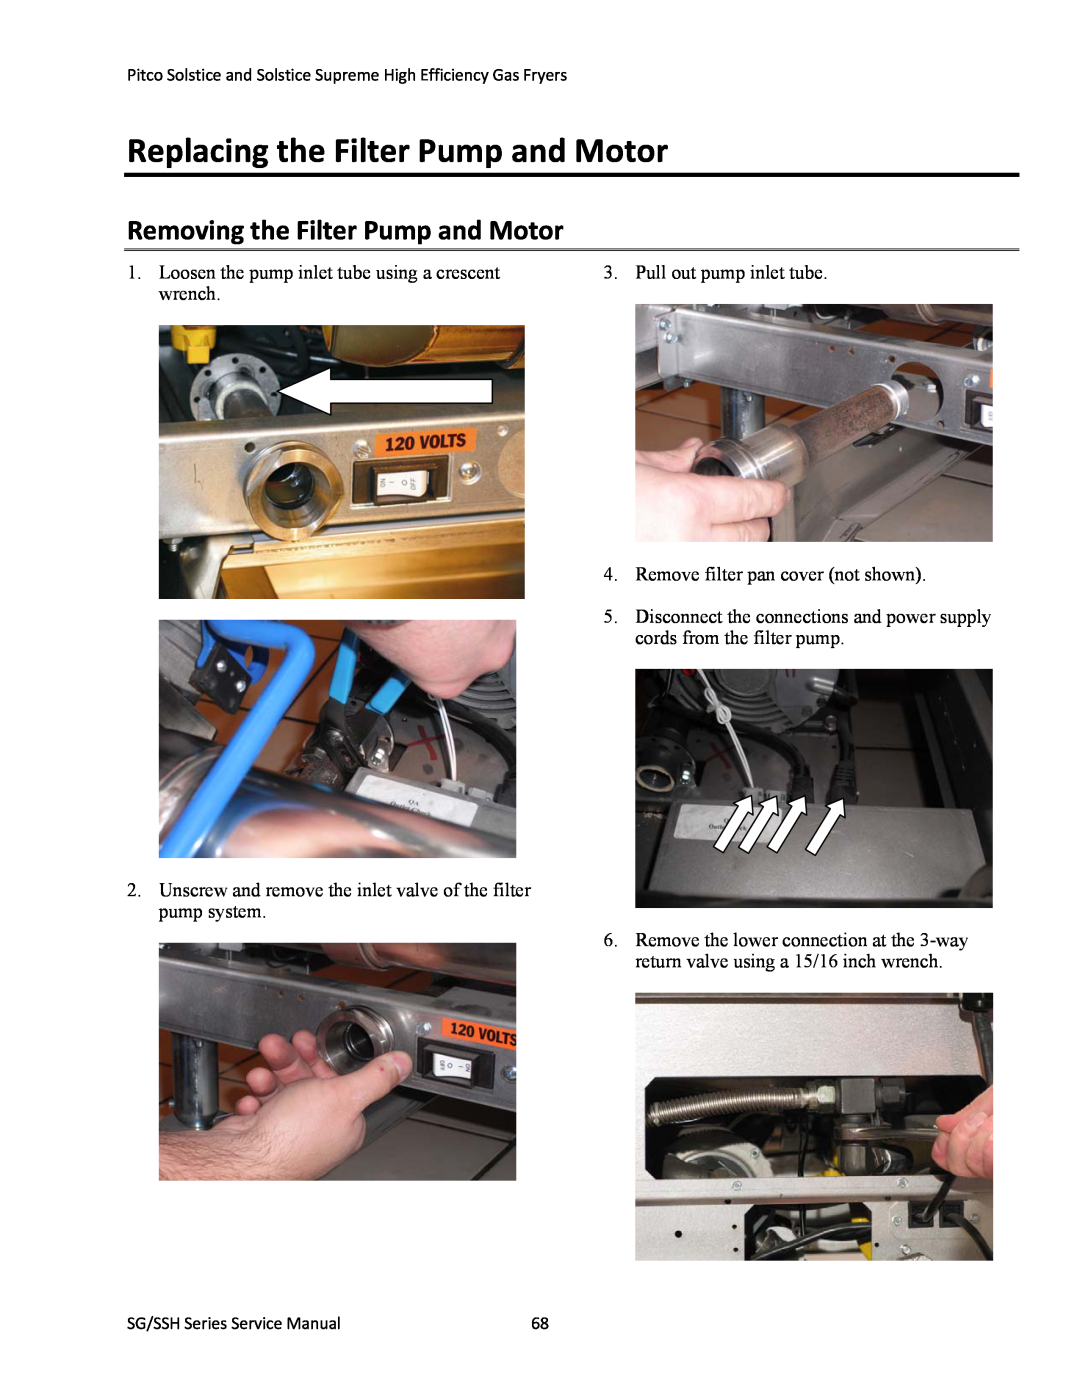 Pitco Frialator L22-345 manual Replacing the Filter Pump and Motor, Removing the Filter Pump and Motor 